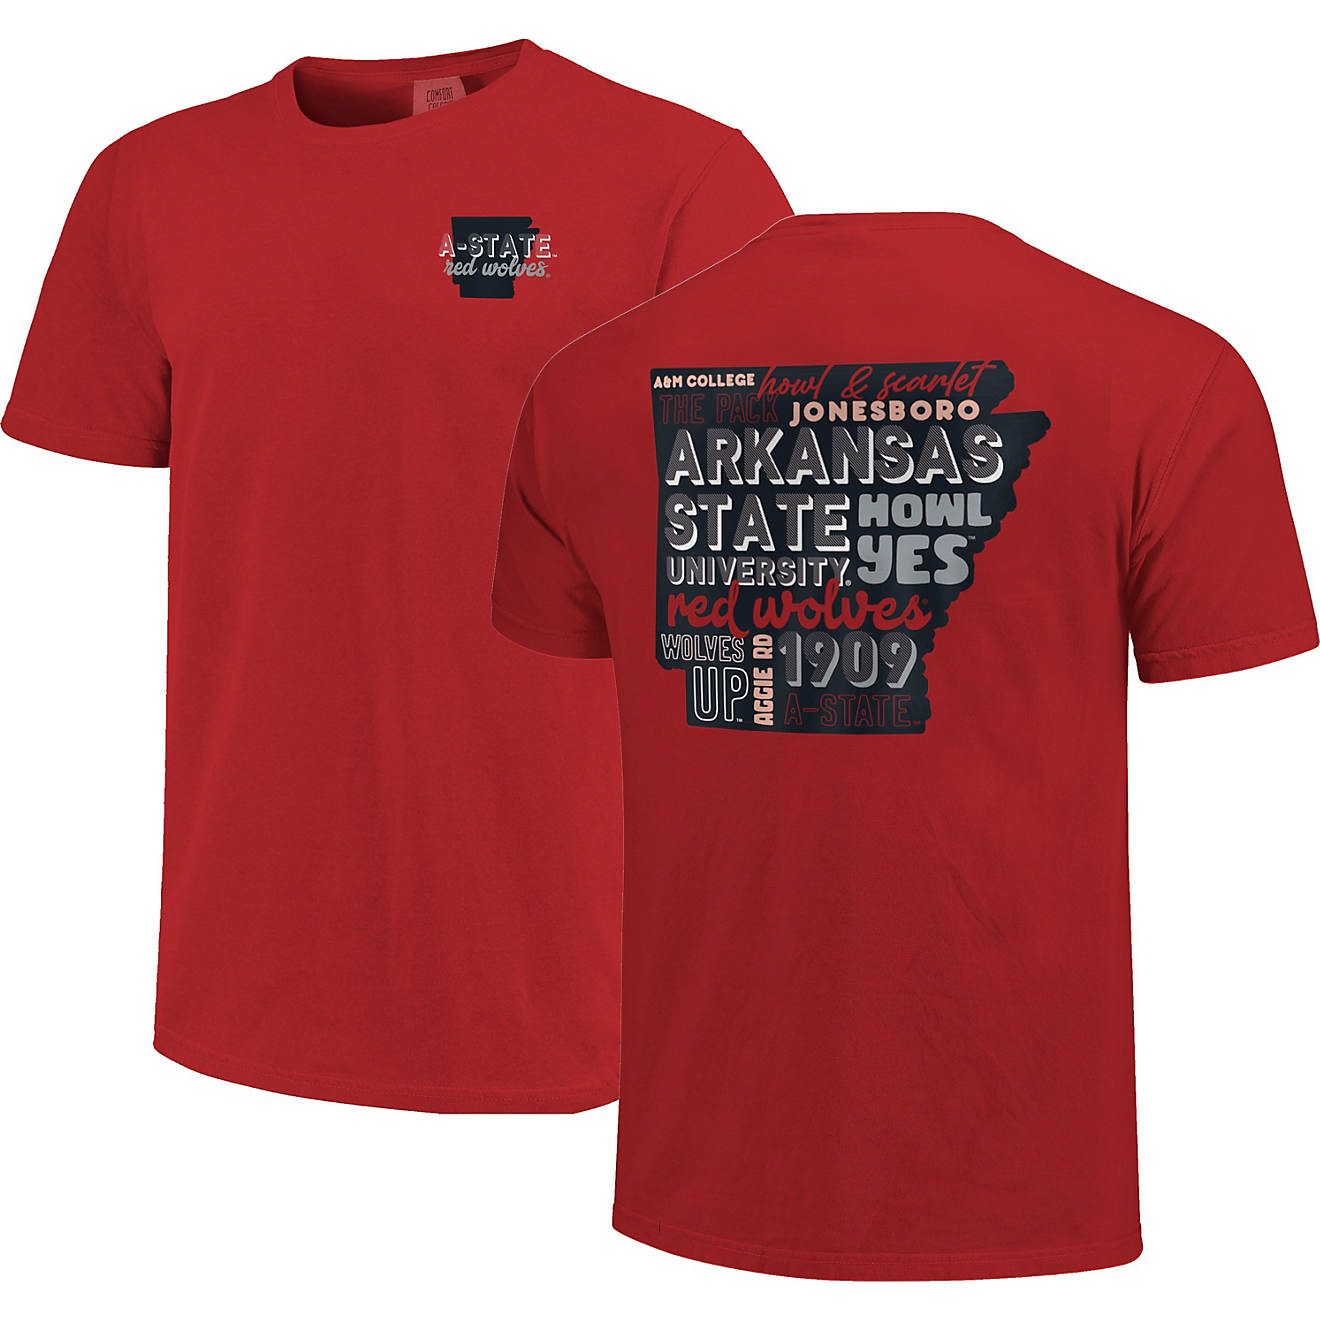 Arkansas Shirt Arkansas TShirt, Arkansas T-shirt College Shirt Comfort Color Shirt